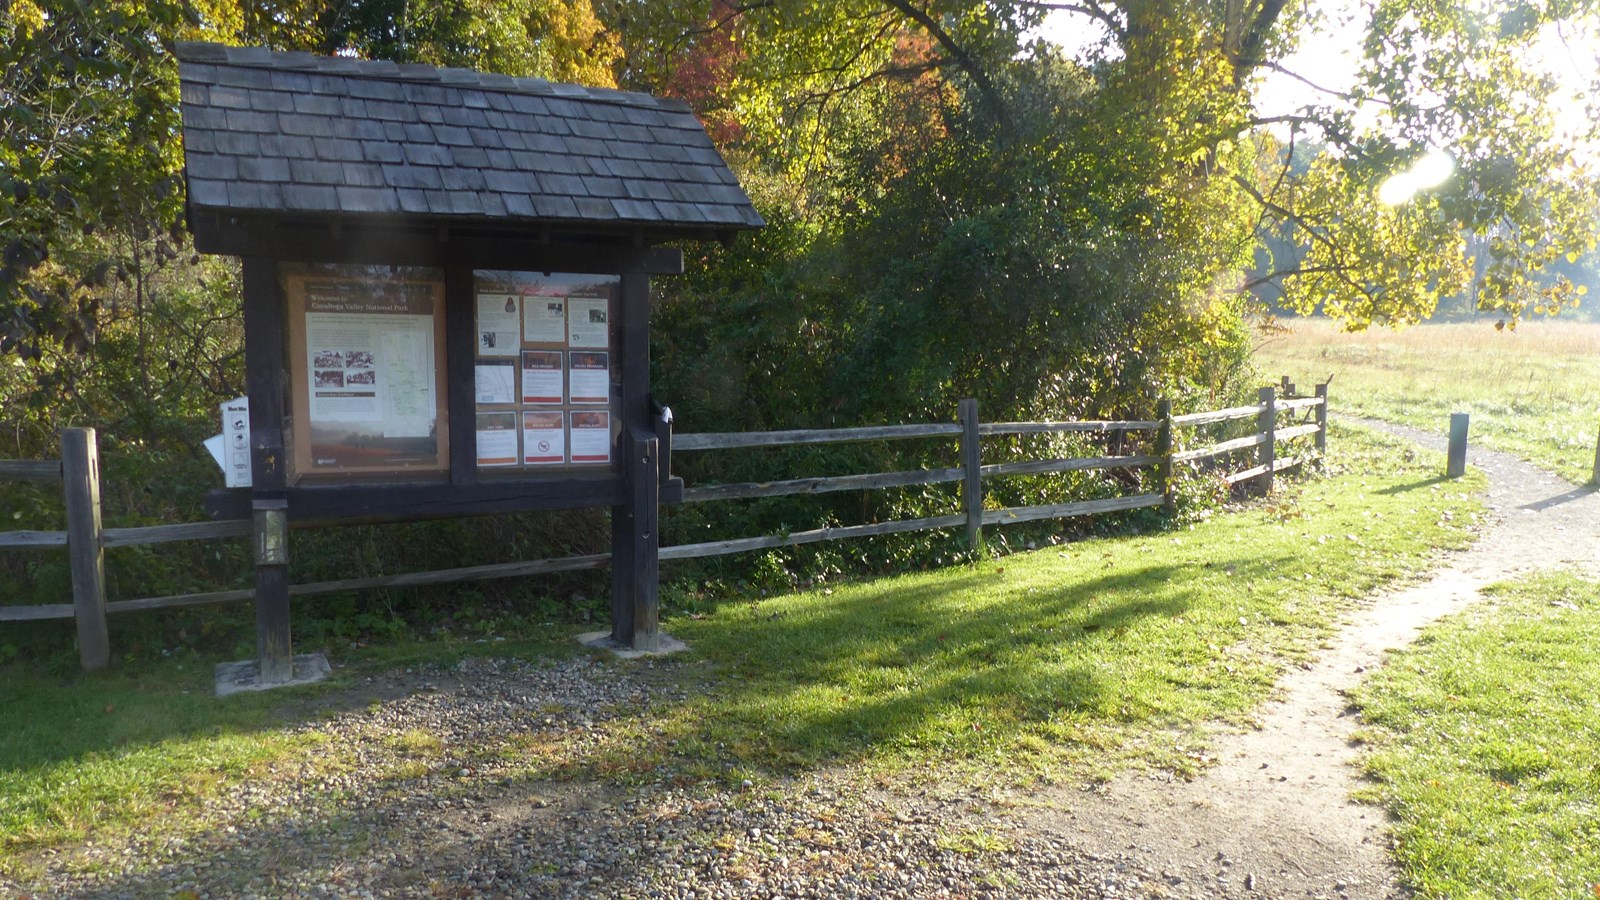 Trailhead bulletin board, left, stands along a rail fence. Unpaved path heads away beside a field.